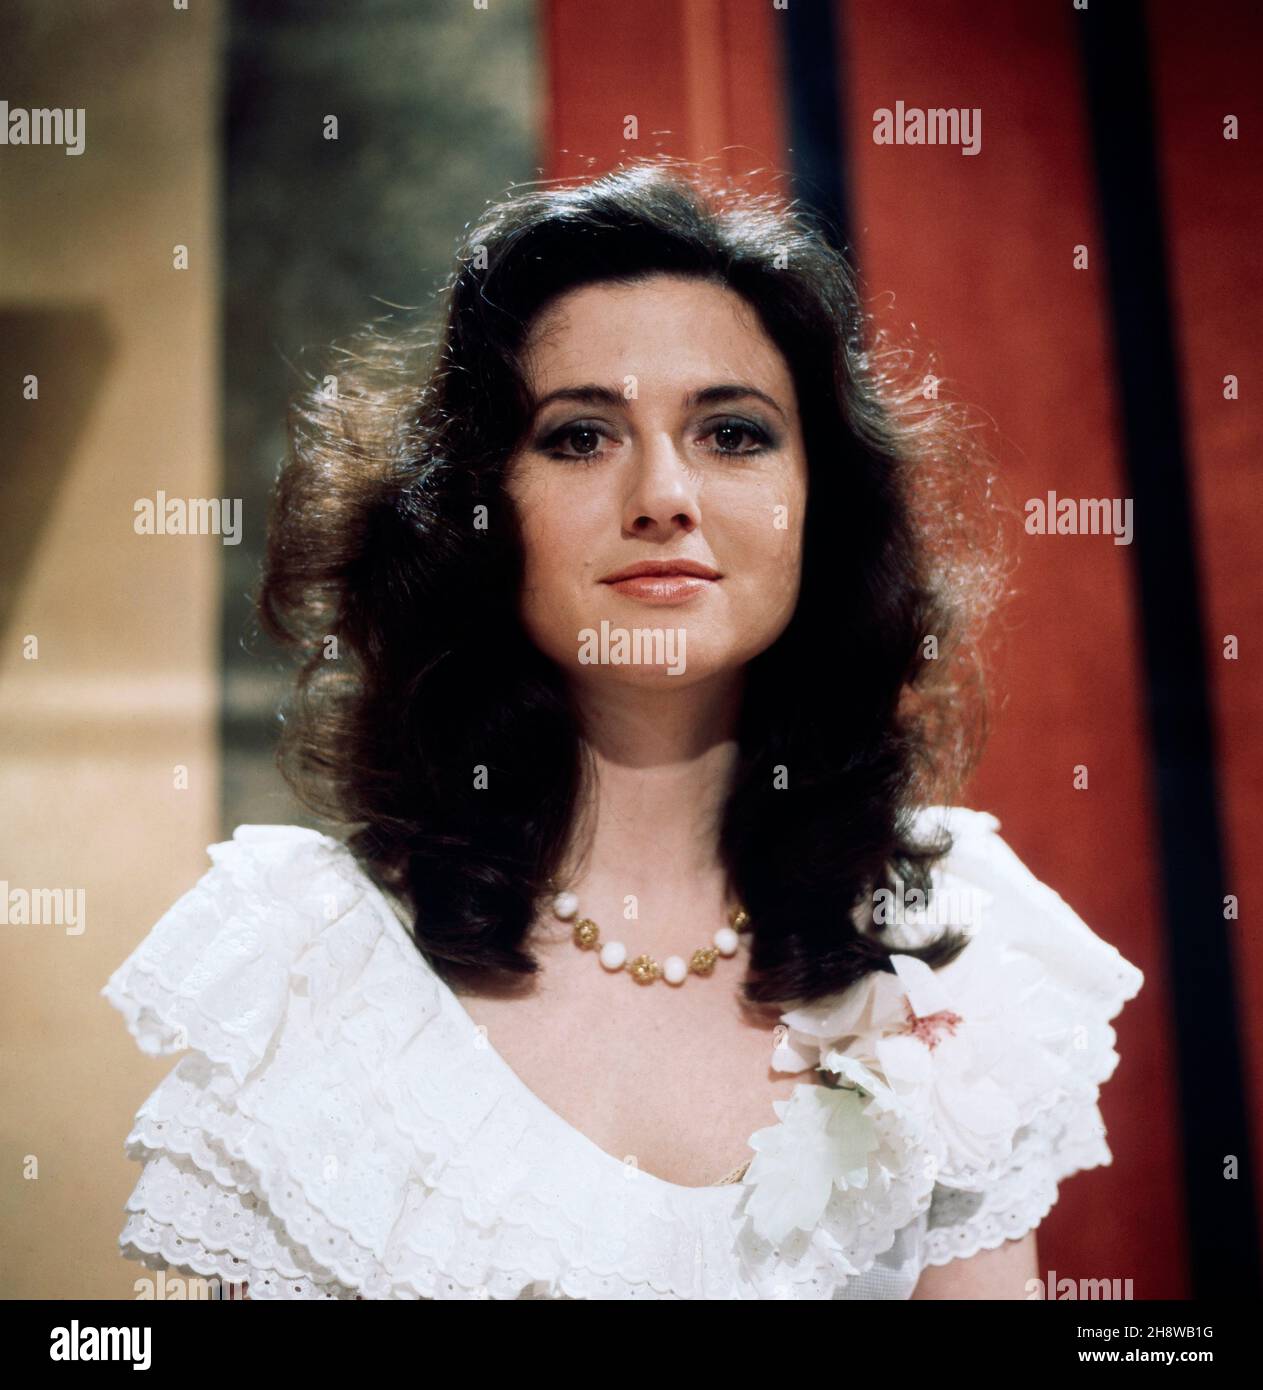 Gigliola Cinquetti, italienische Sängerin, 1976. Gigliola Cinquetti, Italian singer, 1976. Stock Photo